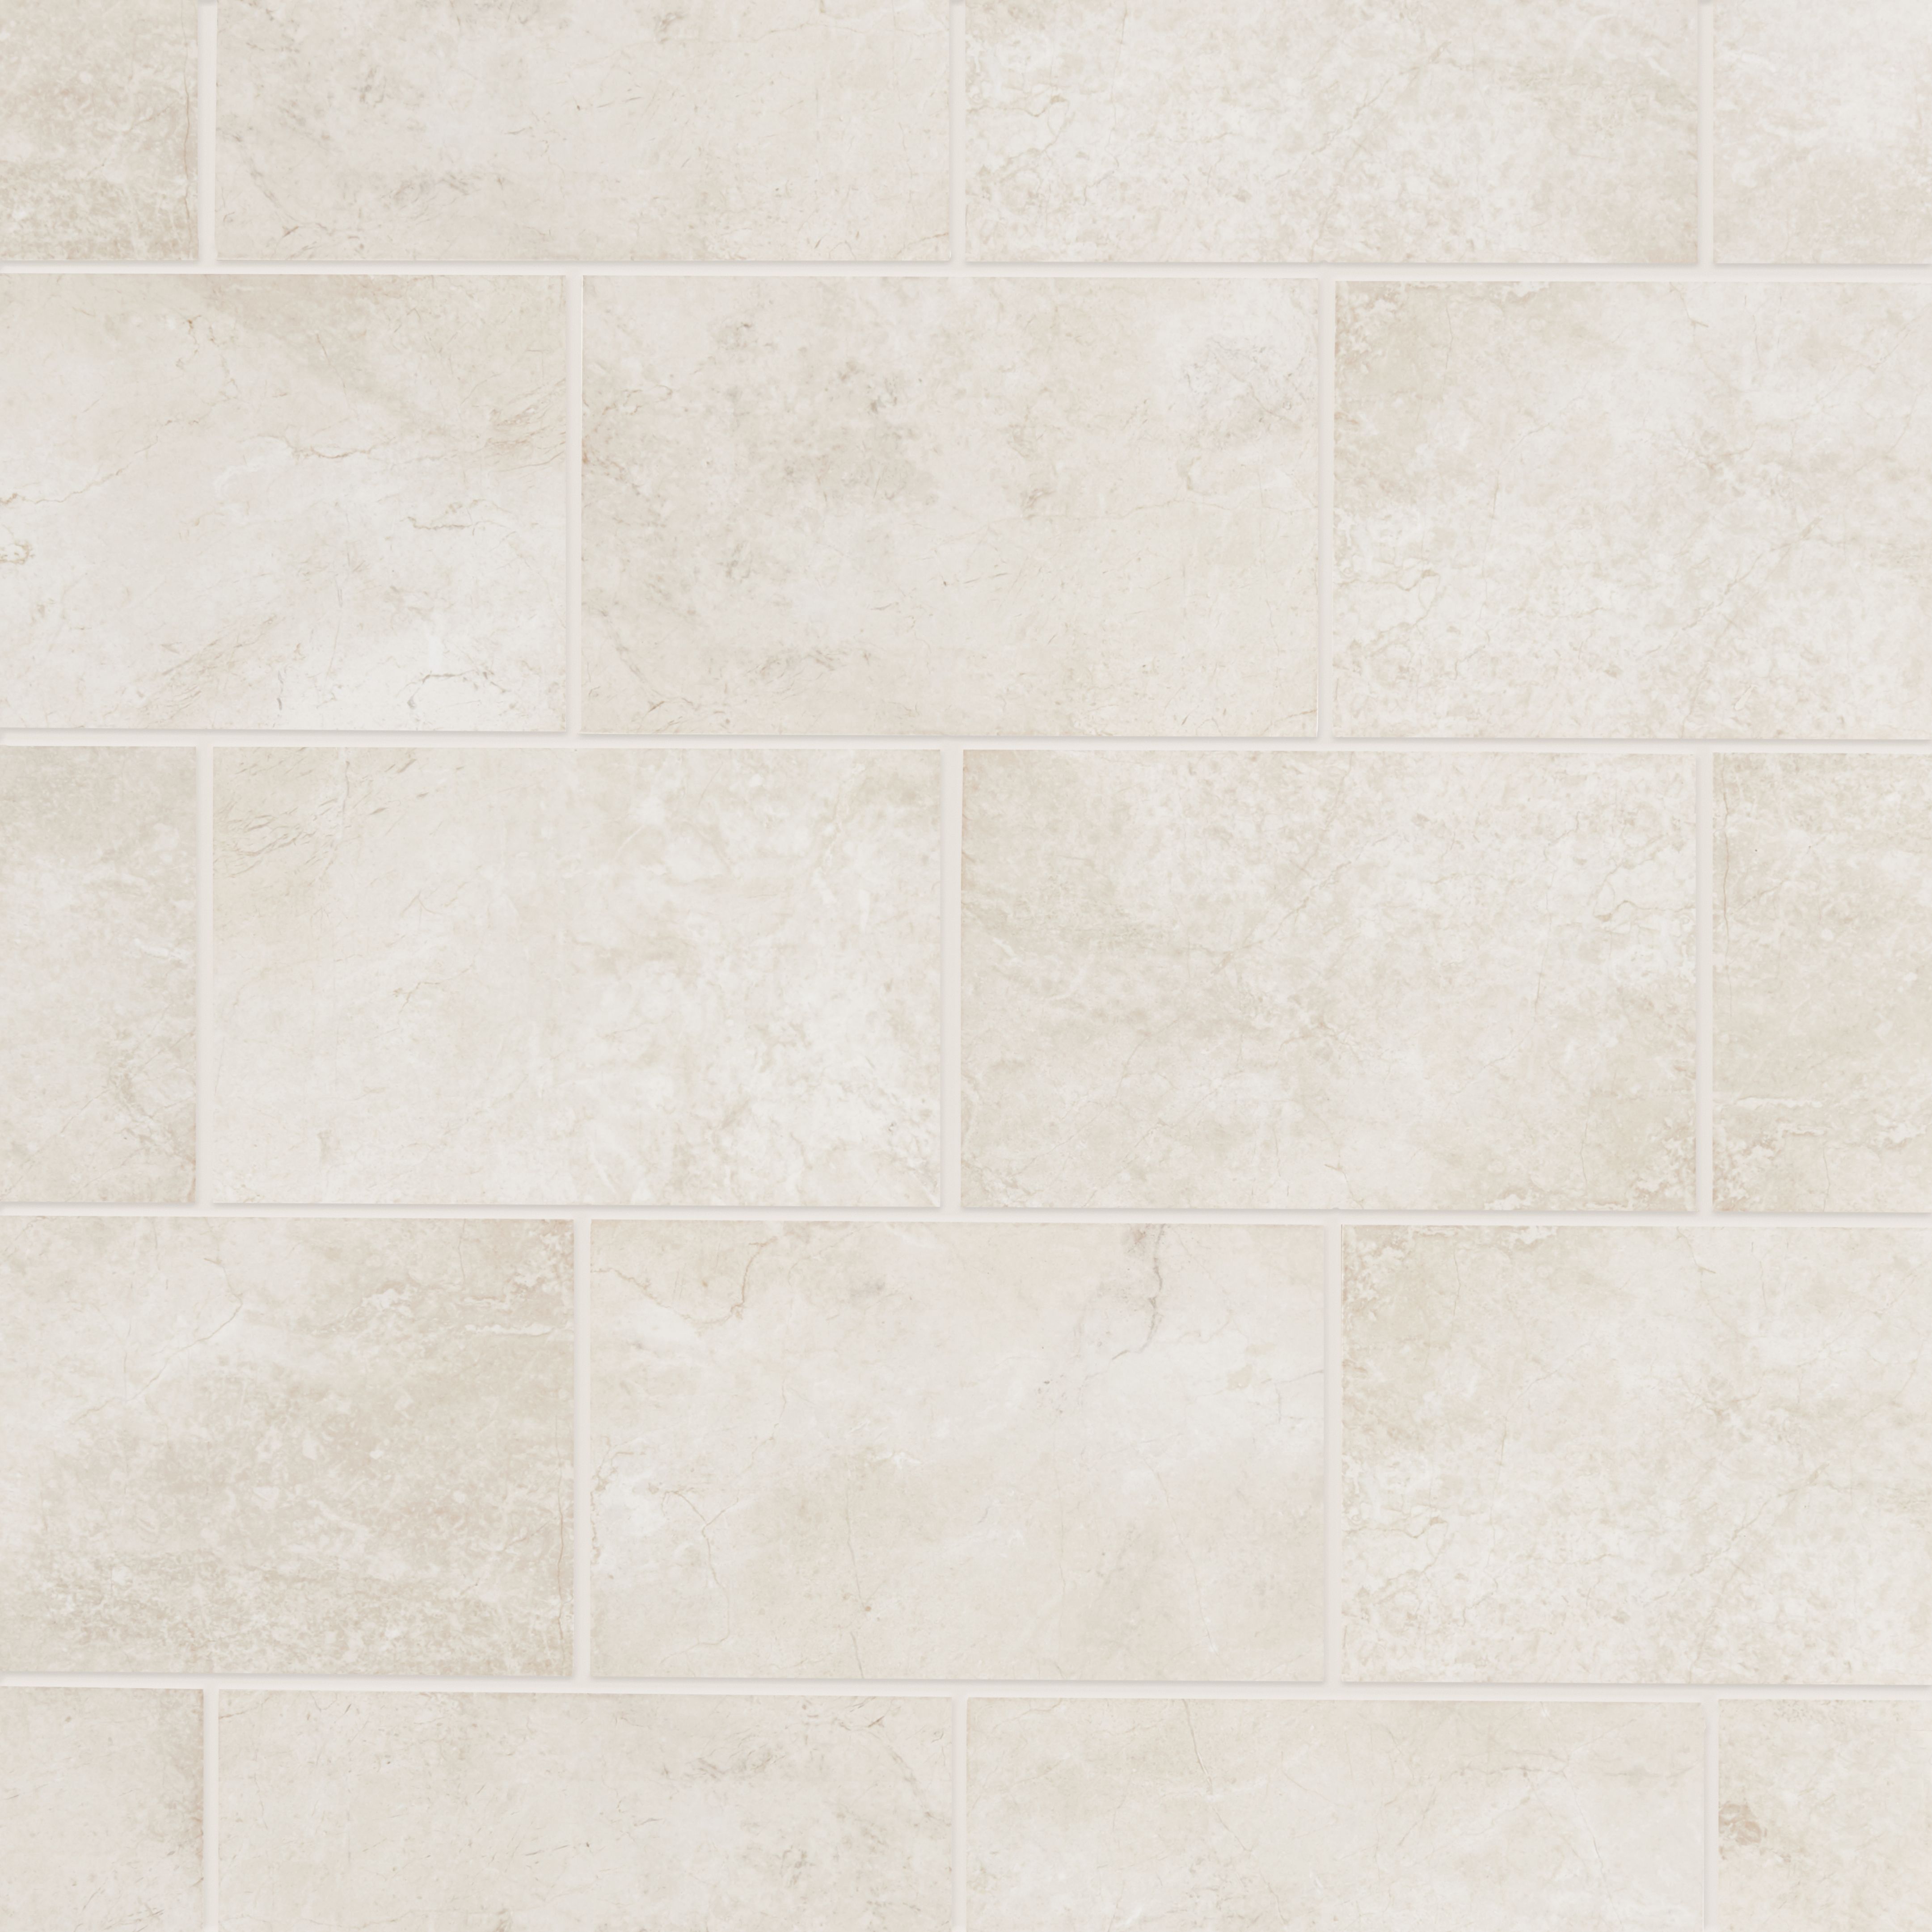 Commo Brown Gloss Flat Ceramic Indoor Wall Tile Sample